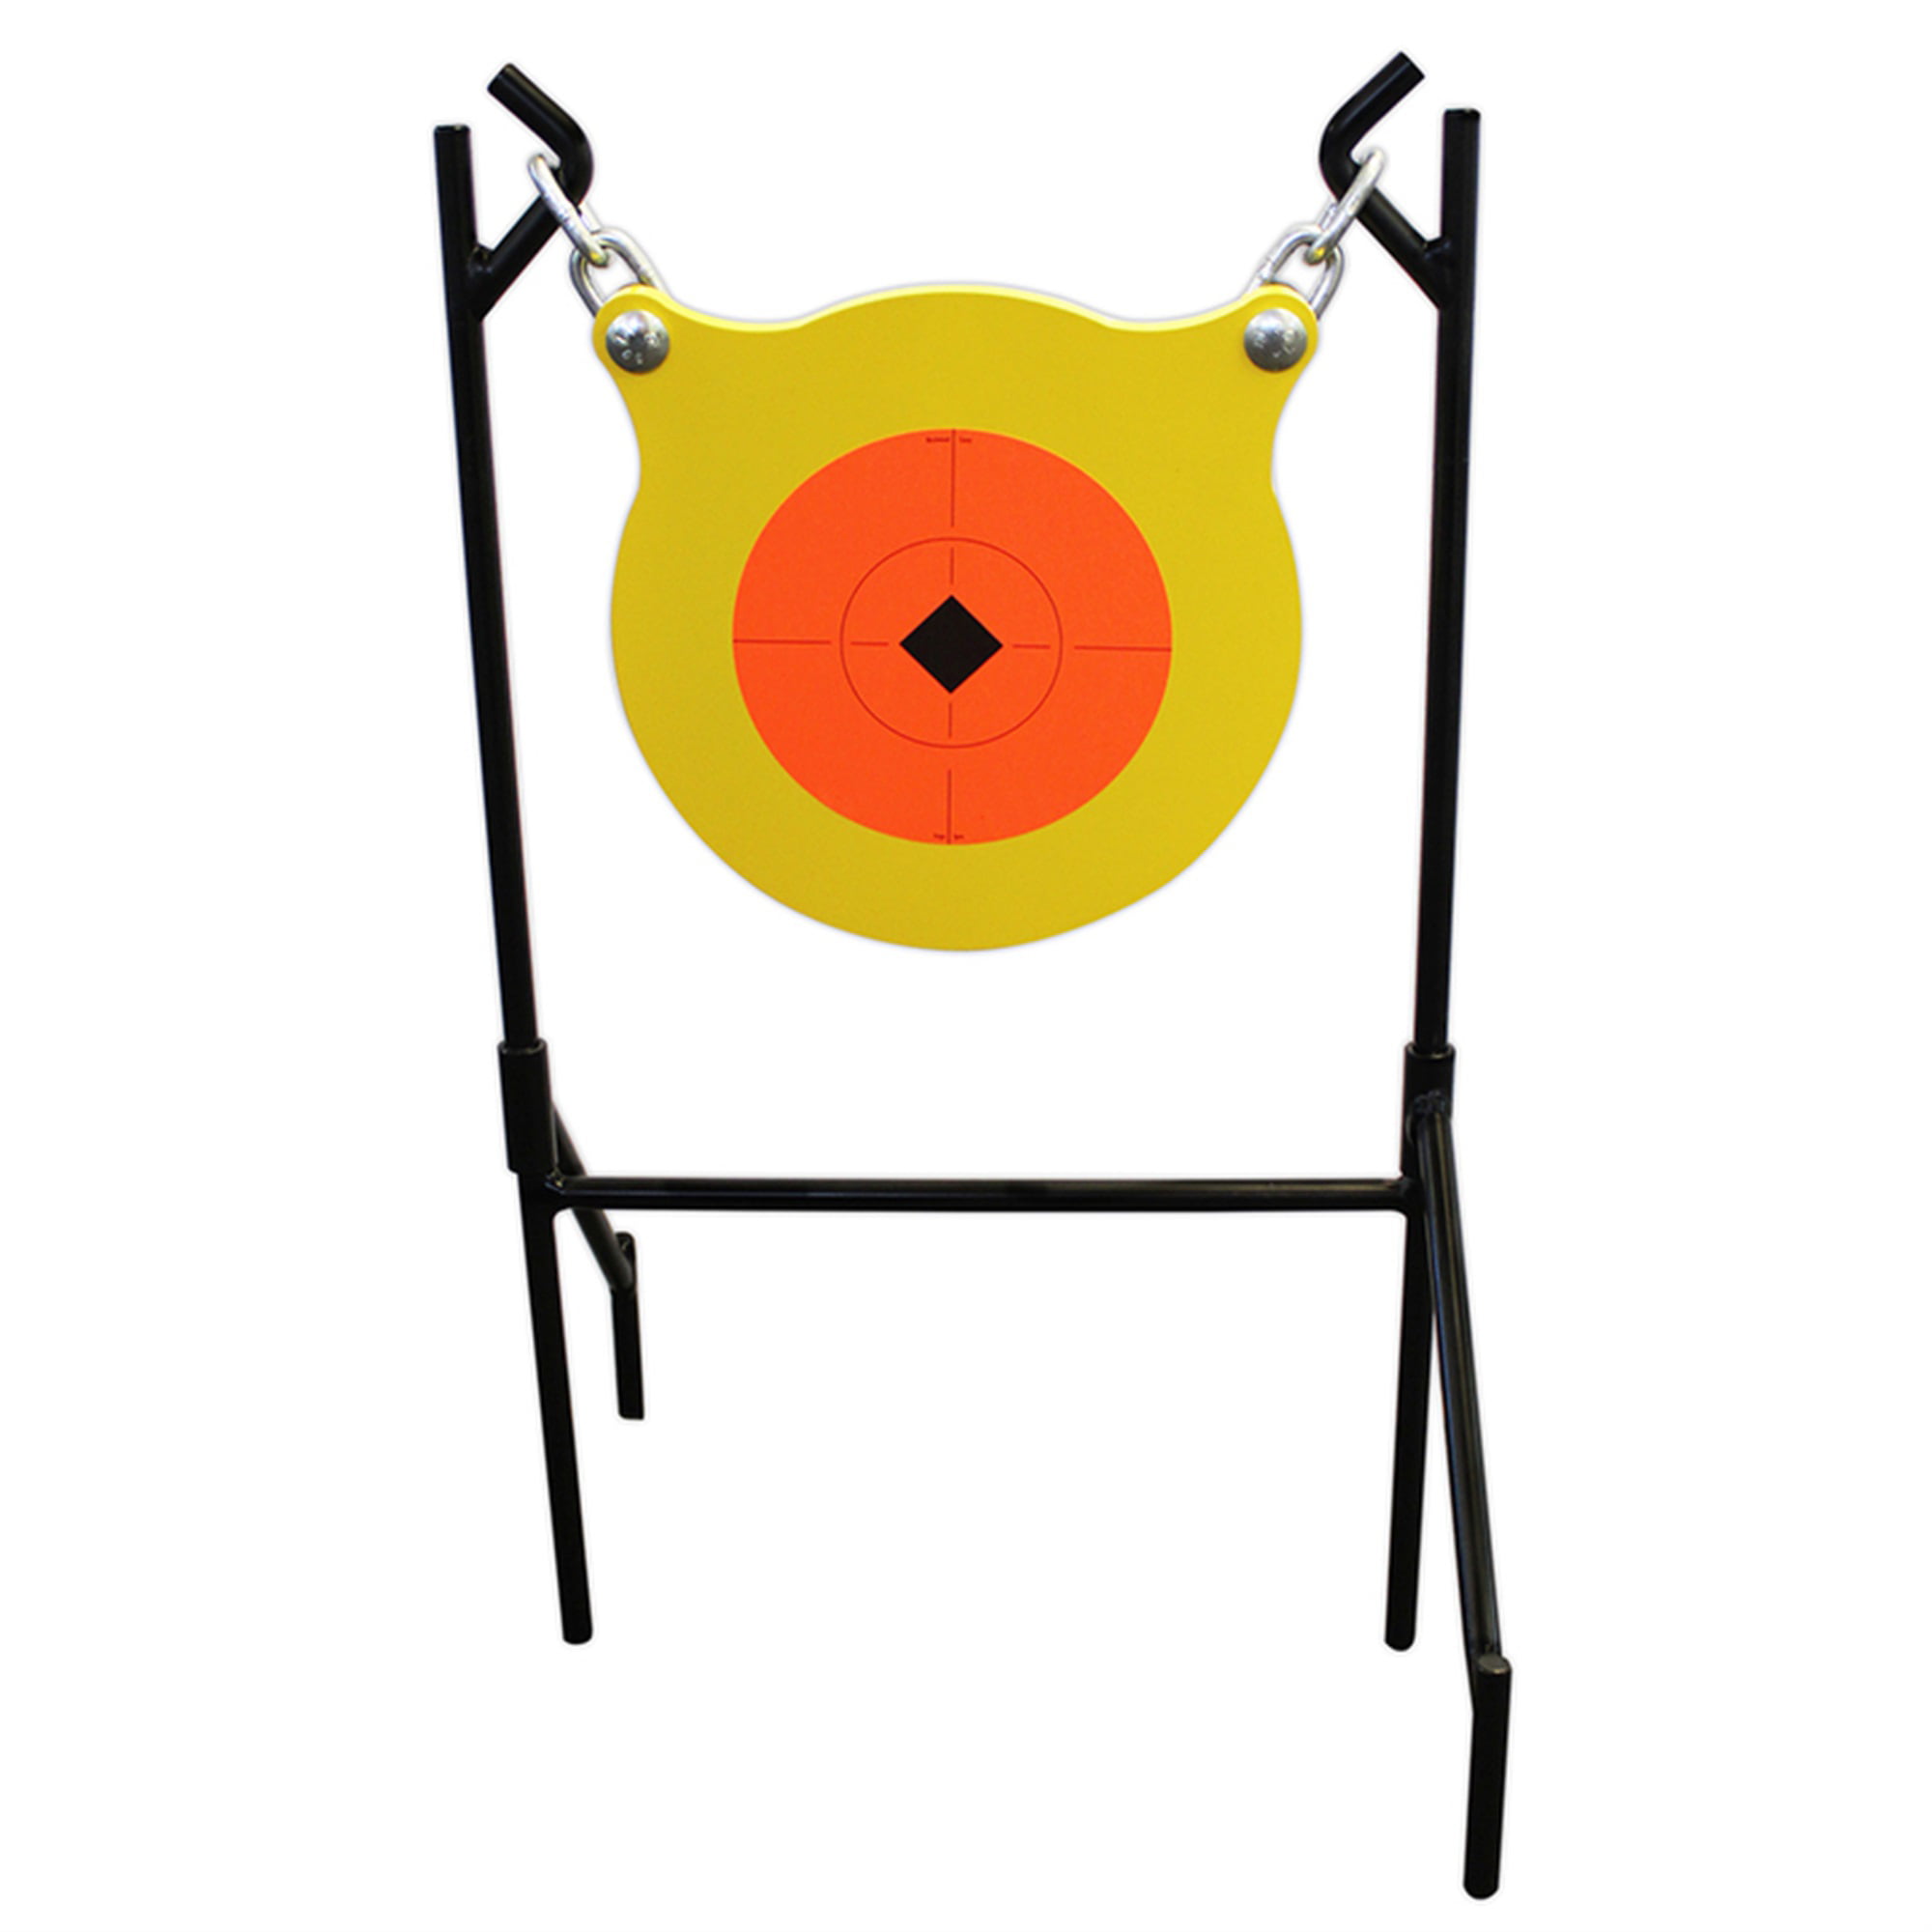 Allen 1526 Metallic Spinner Target Medium Black & Orange for sale online 